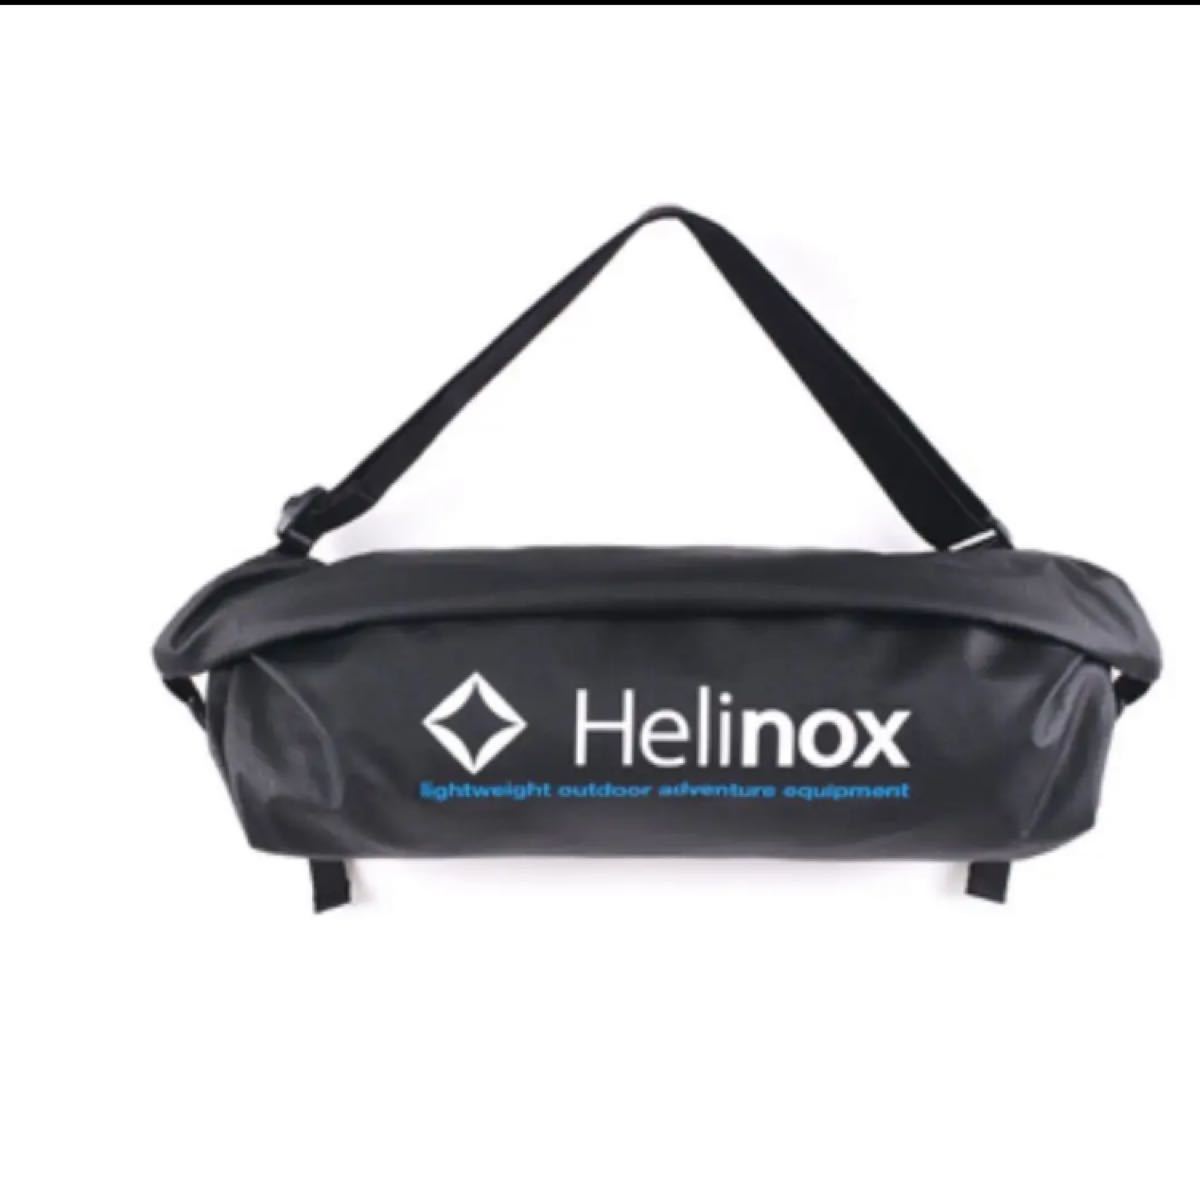 Helinox ヘリノックス フェスティバルチェア